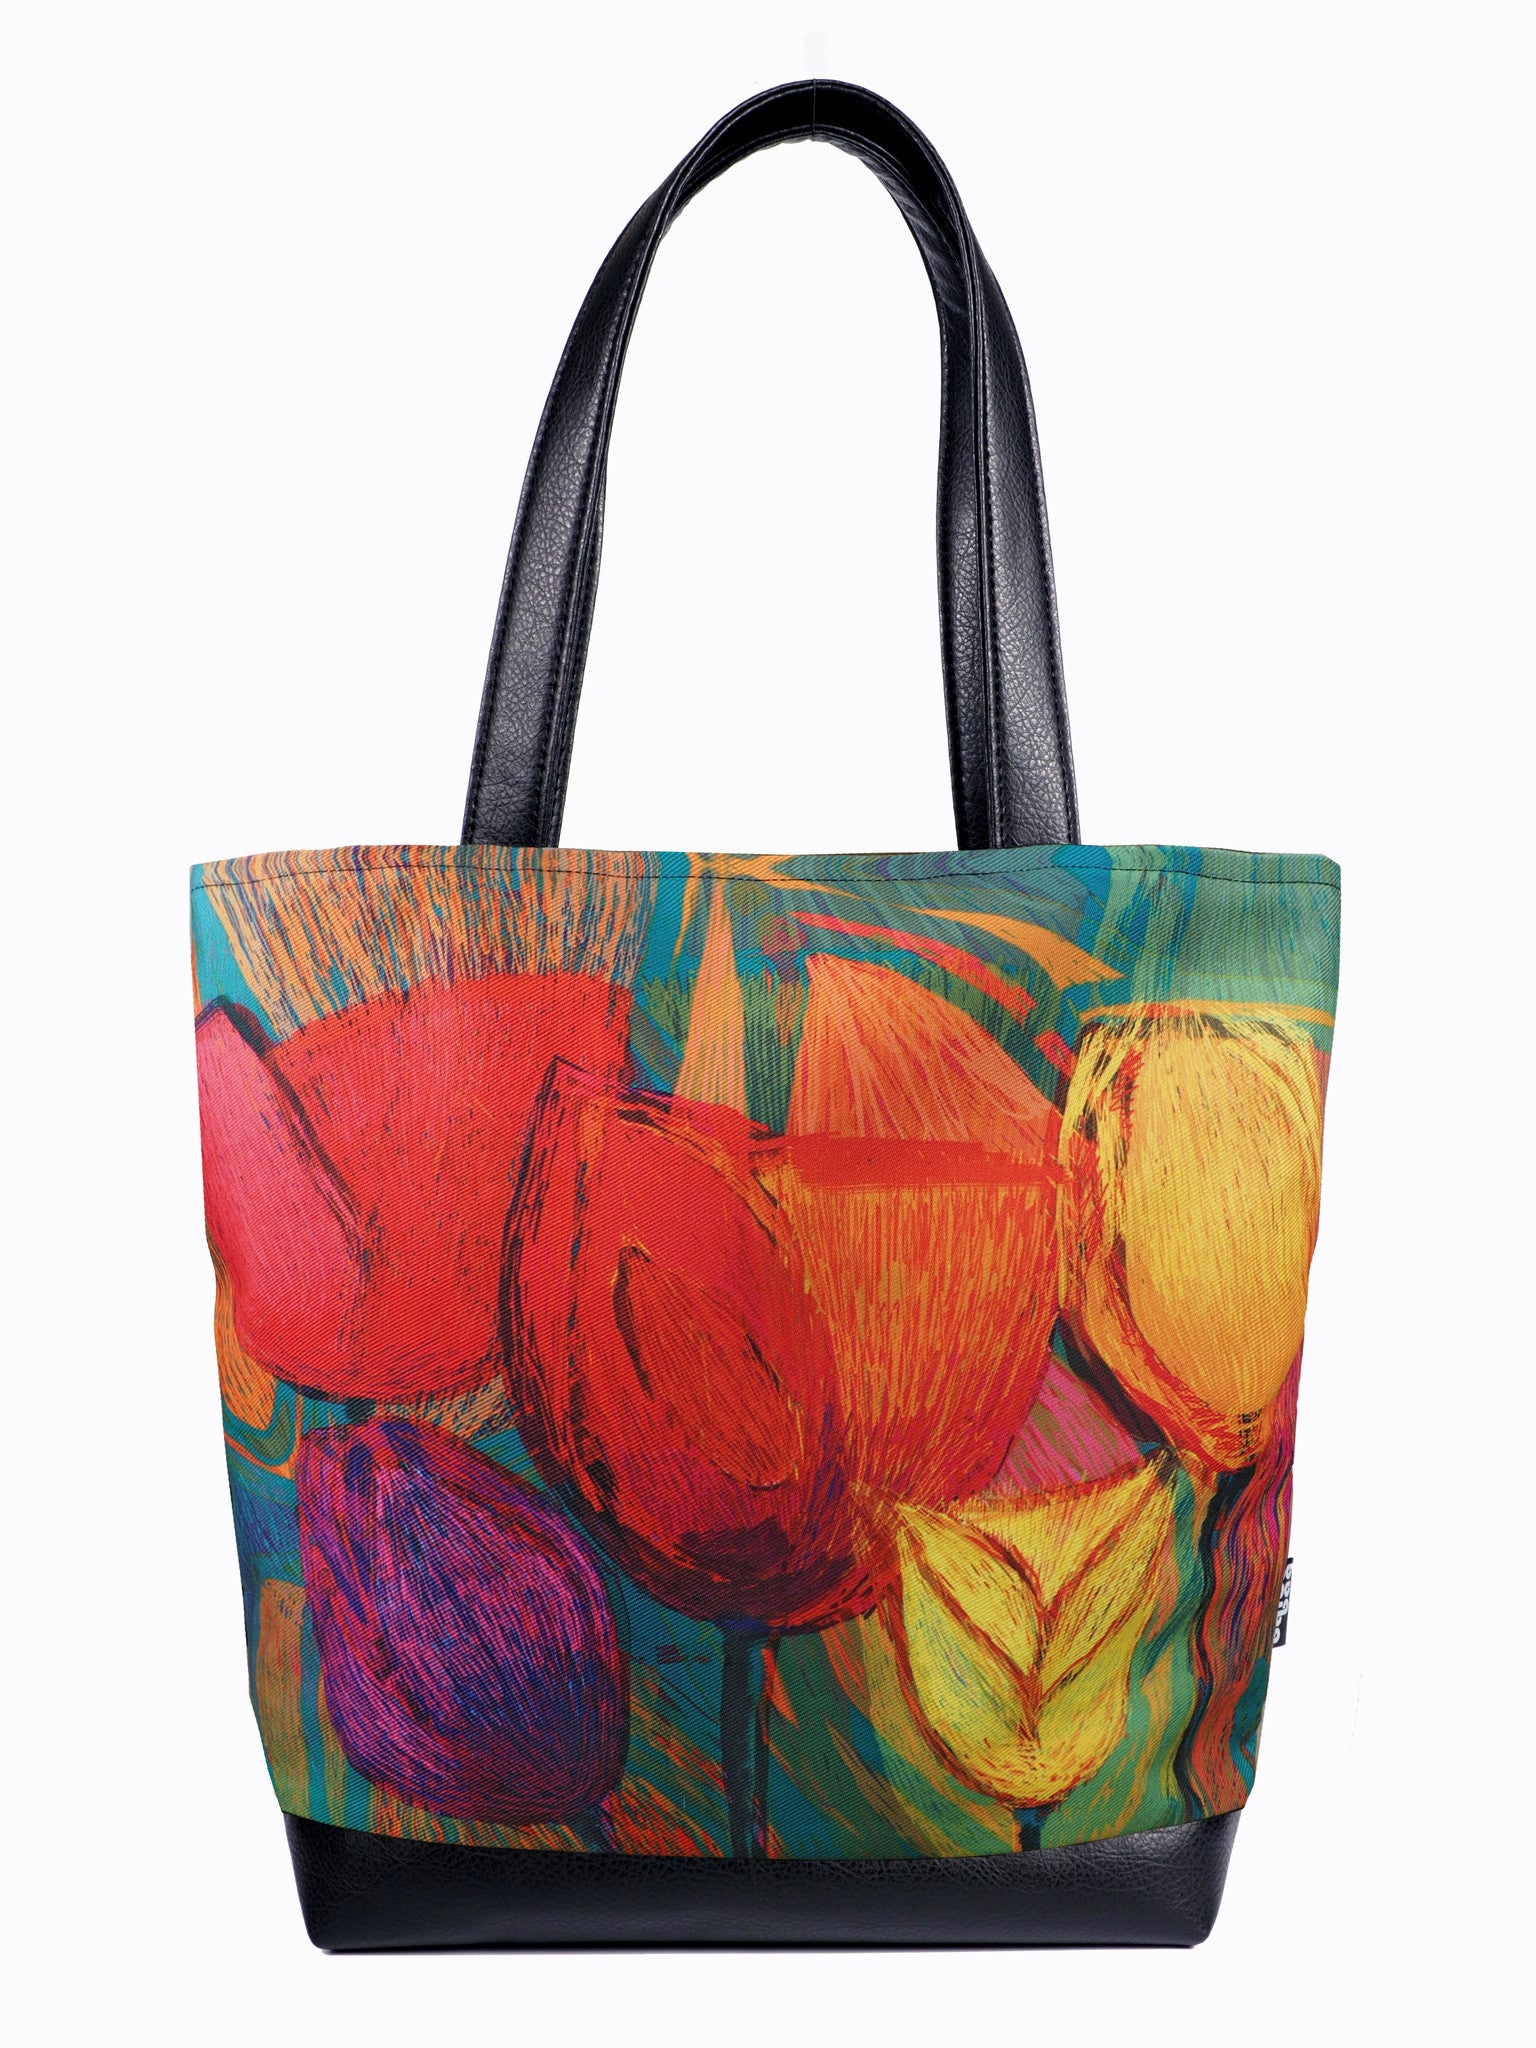 Bardo large tote bag - Garden of tulips - Premium large tote bag from Bardo bag - Just lvabstract, art bag, black, floral, flower, gift, green, handemade, large, nature, pink, purple, red, tablet, tote bag, tulips, vegan leather, woman, work bag89.00! Shop now at BARDO ART WORKS